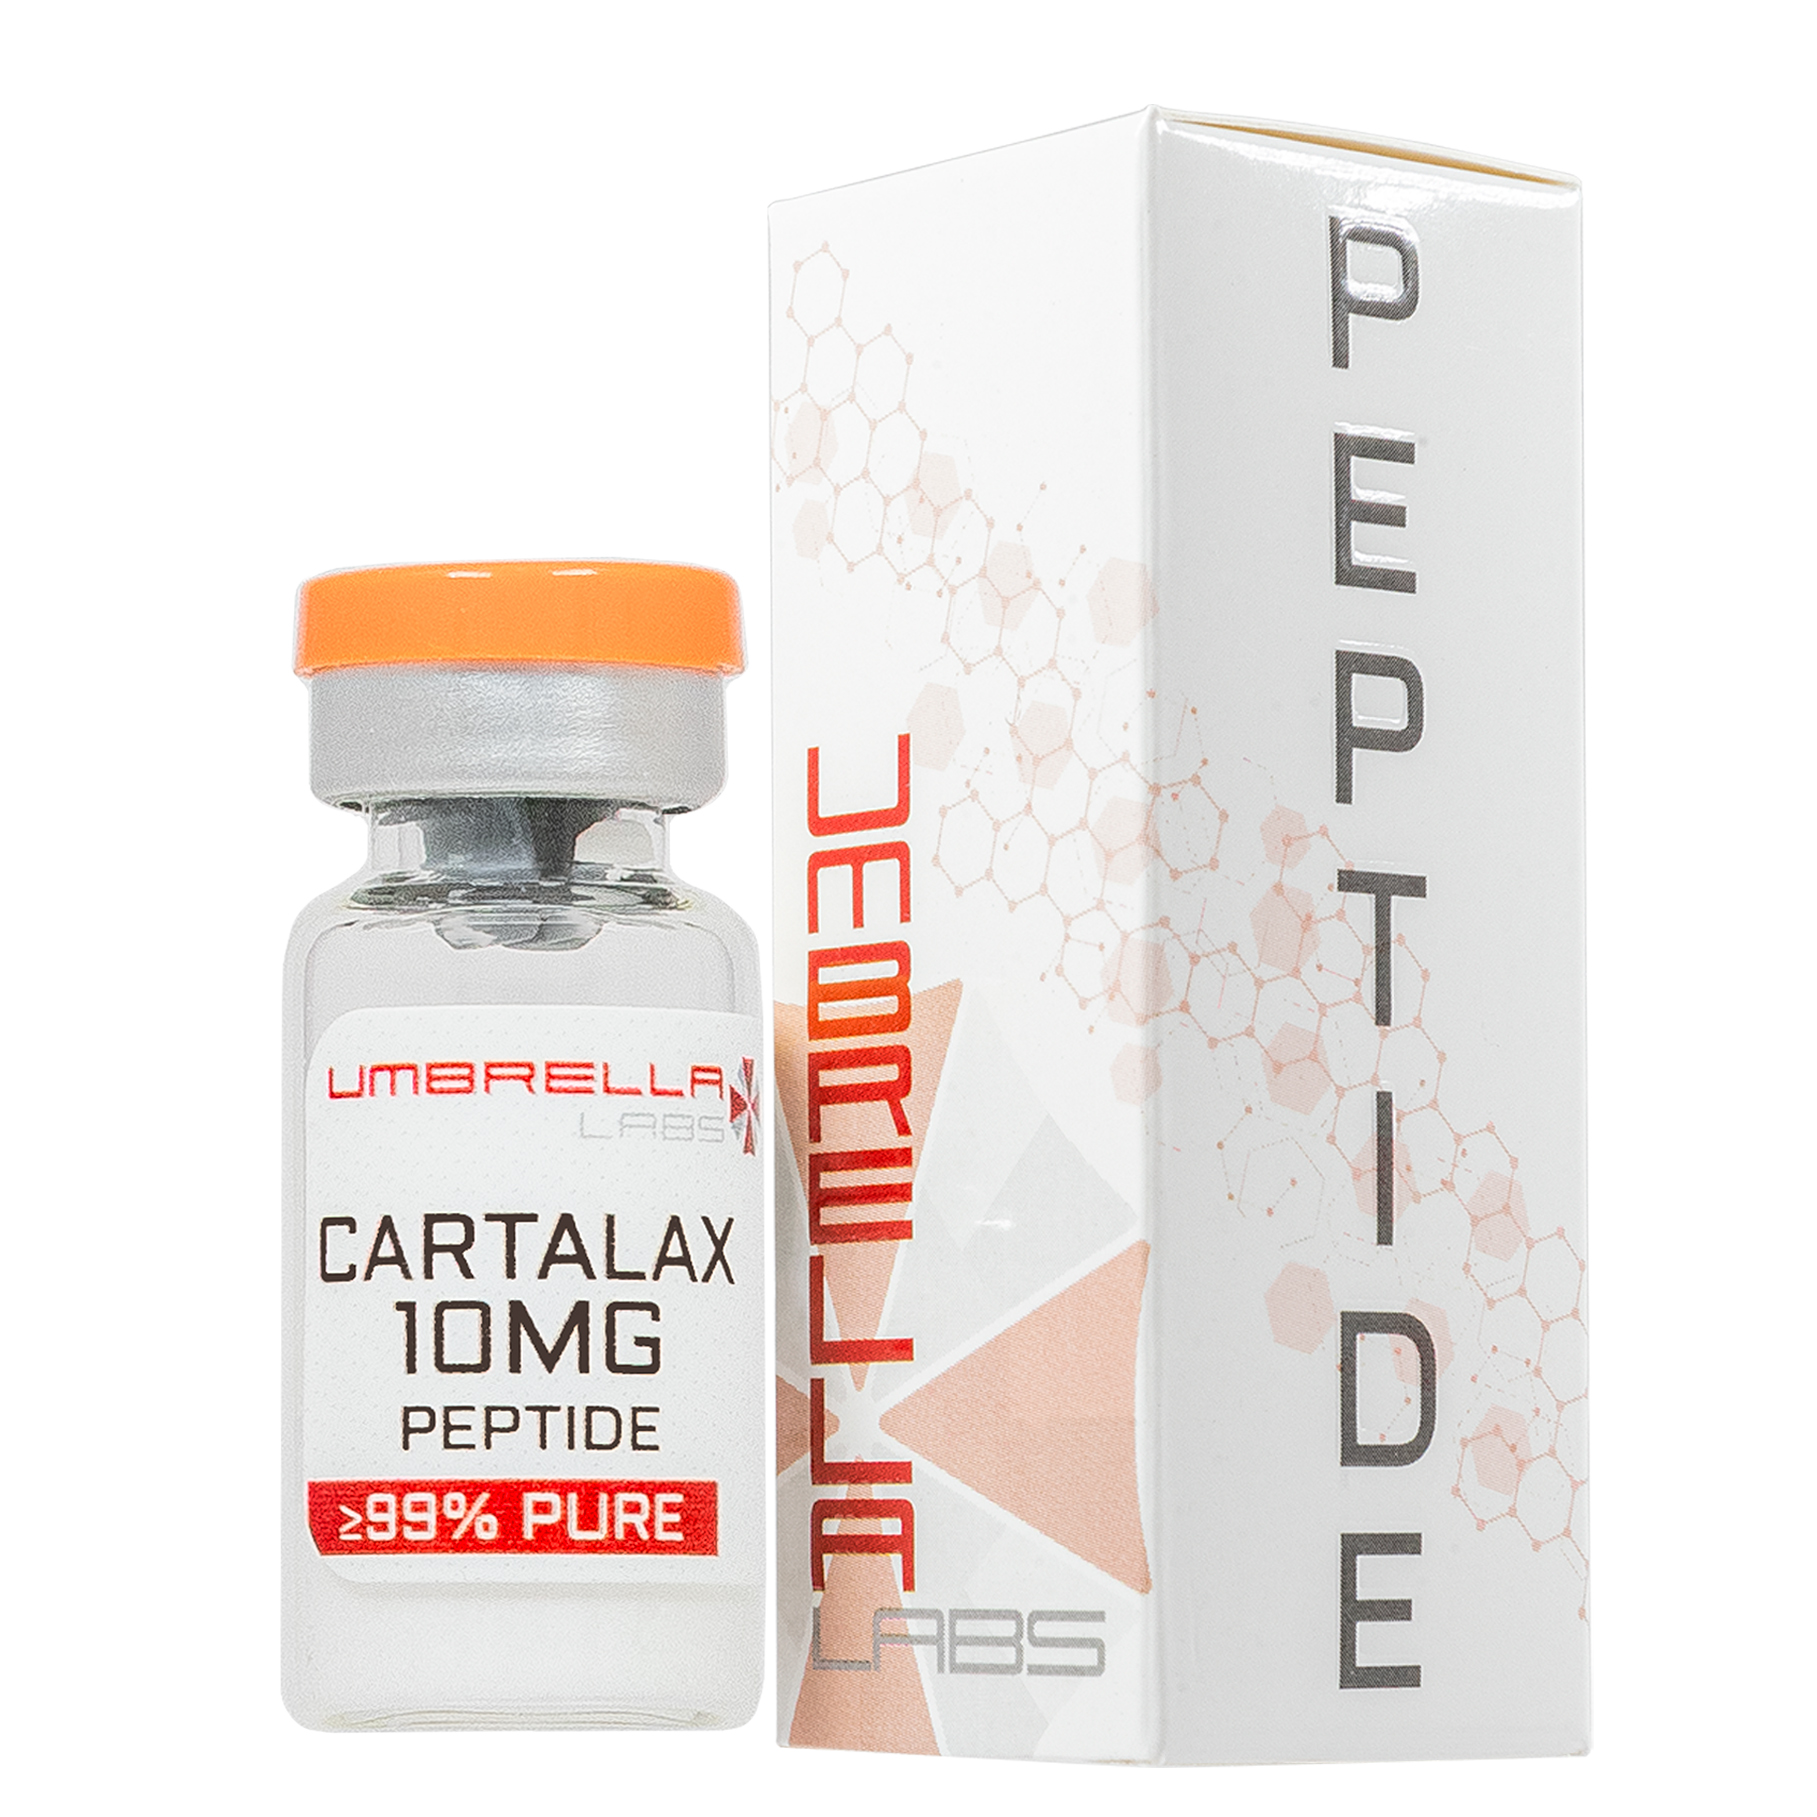 cartalax peptide 10mg vial